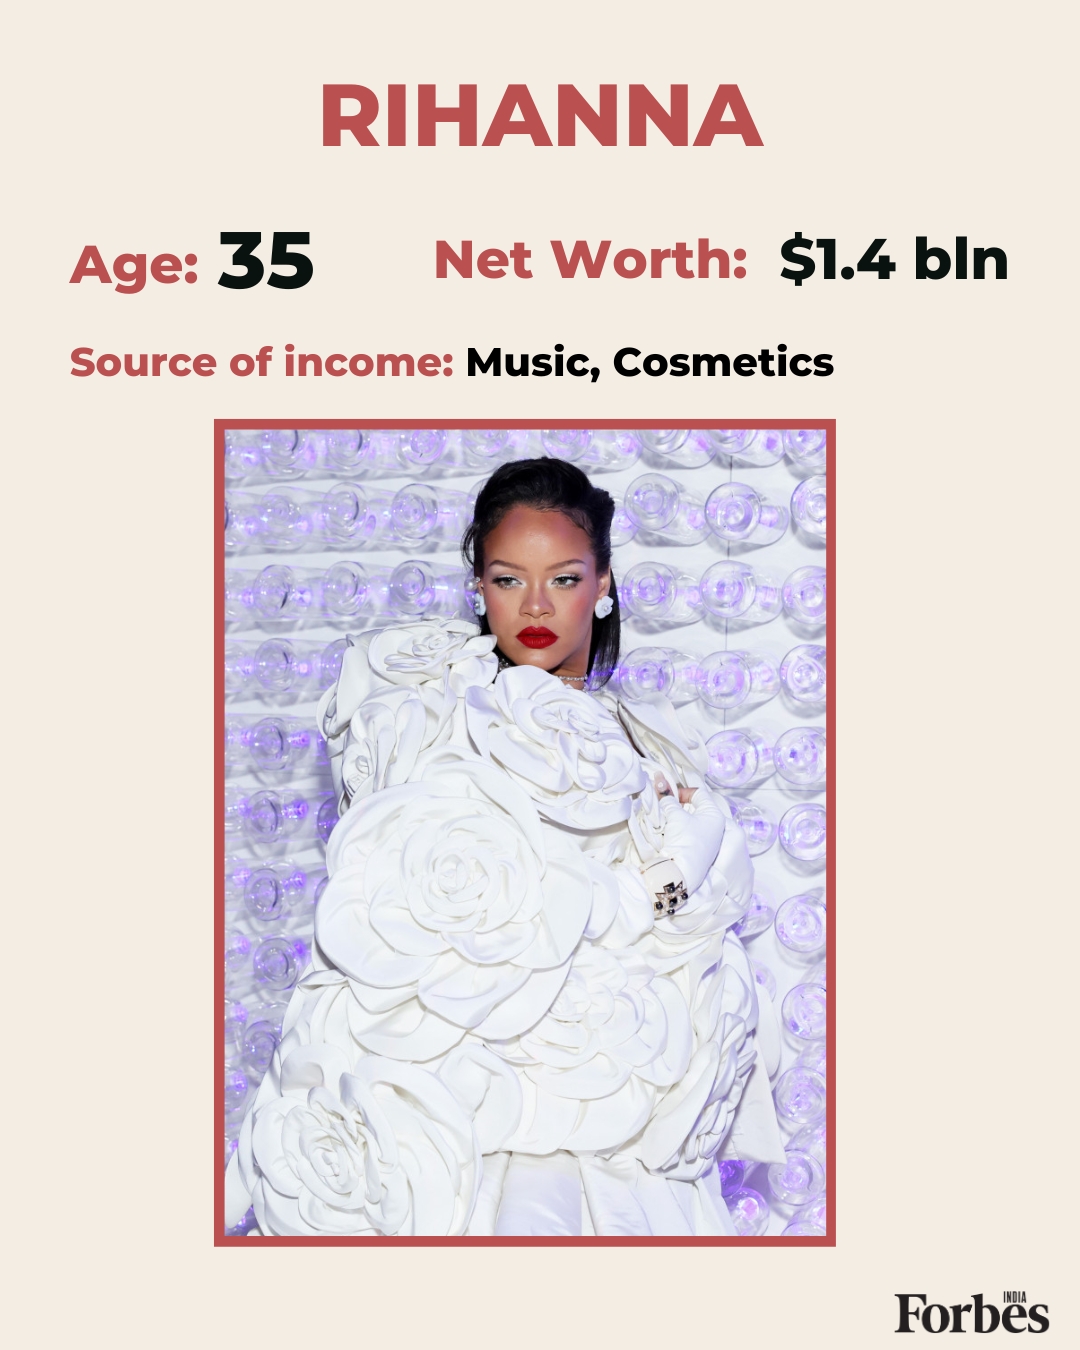 Taylor Swift, Rihanna among America's richest self-made women under 40